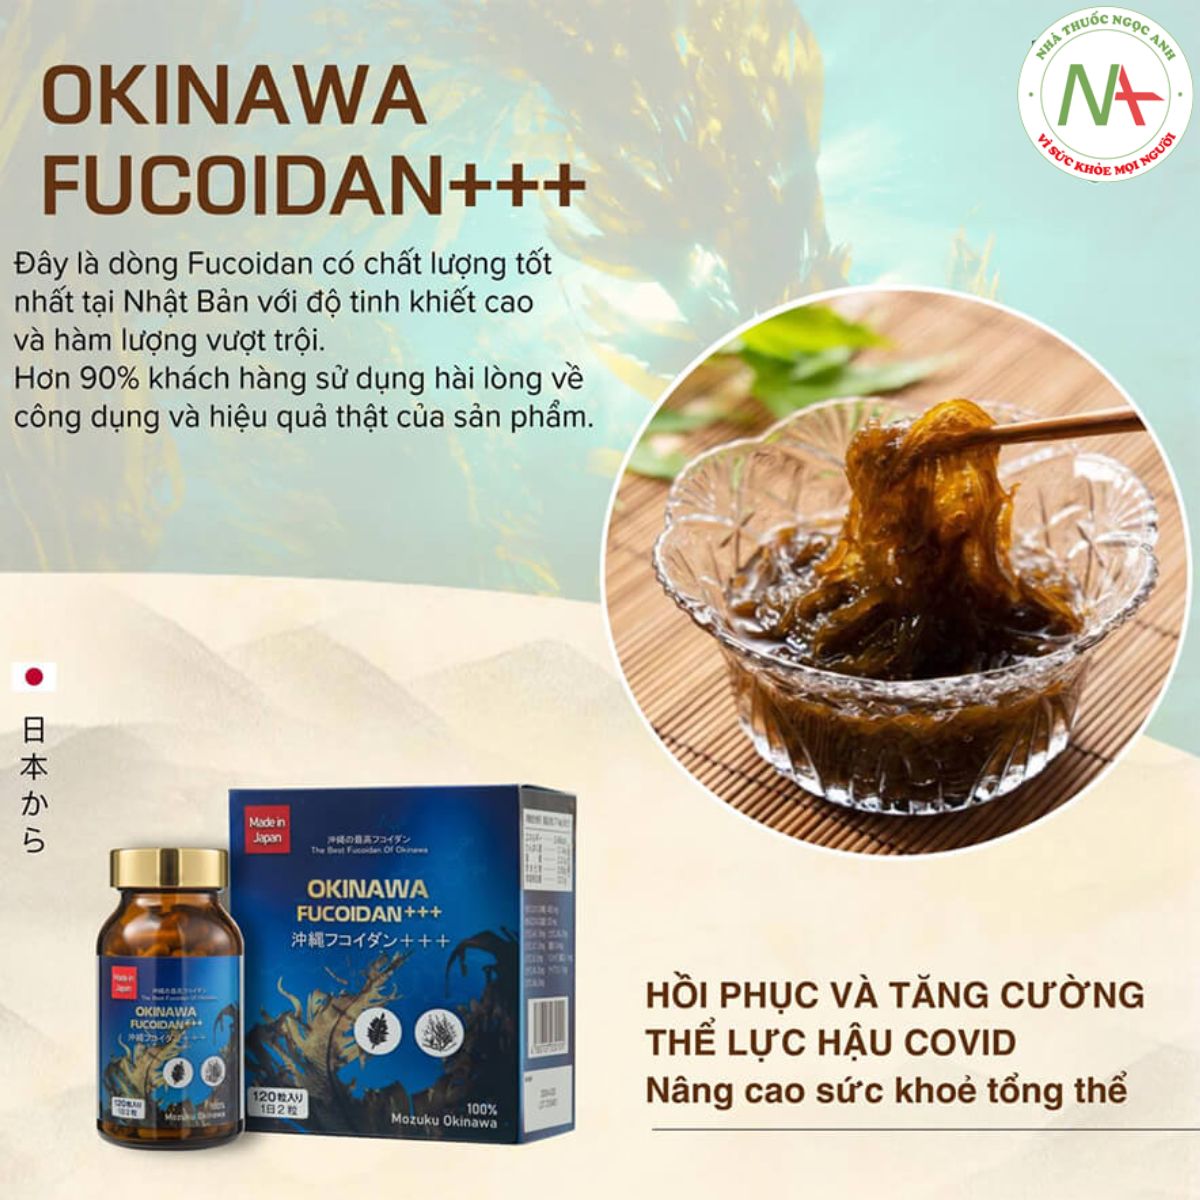 Okinawa Fucoidan+++ nhathuocngocanh